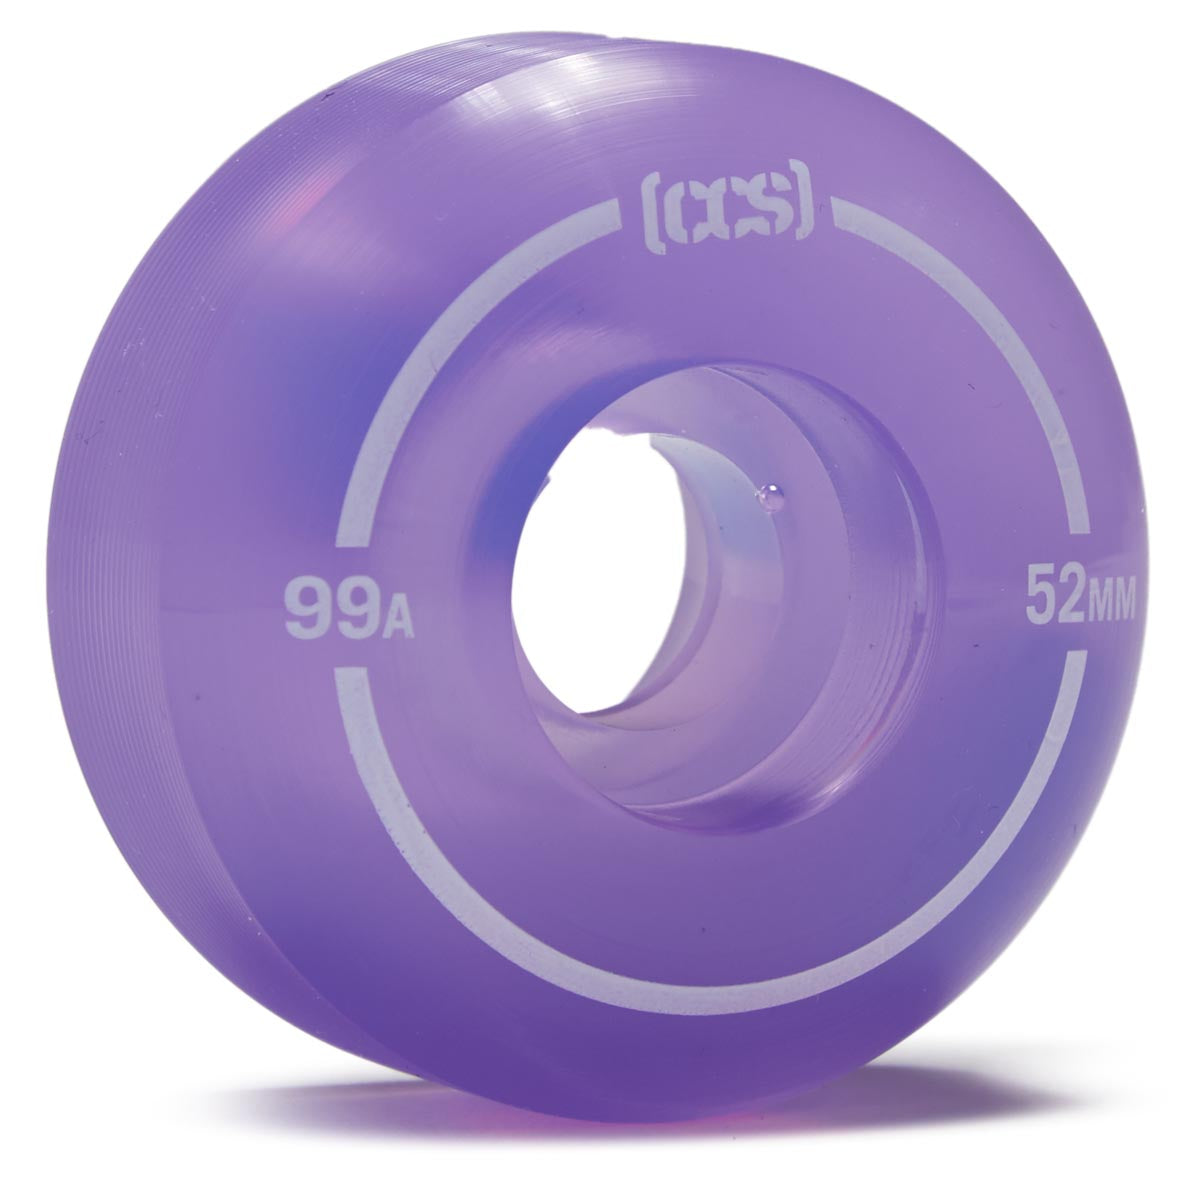 CCS Clear 99a Skateboard Wheels - Purple - 52mm image 1